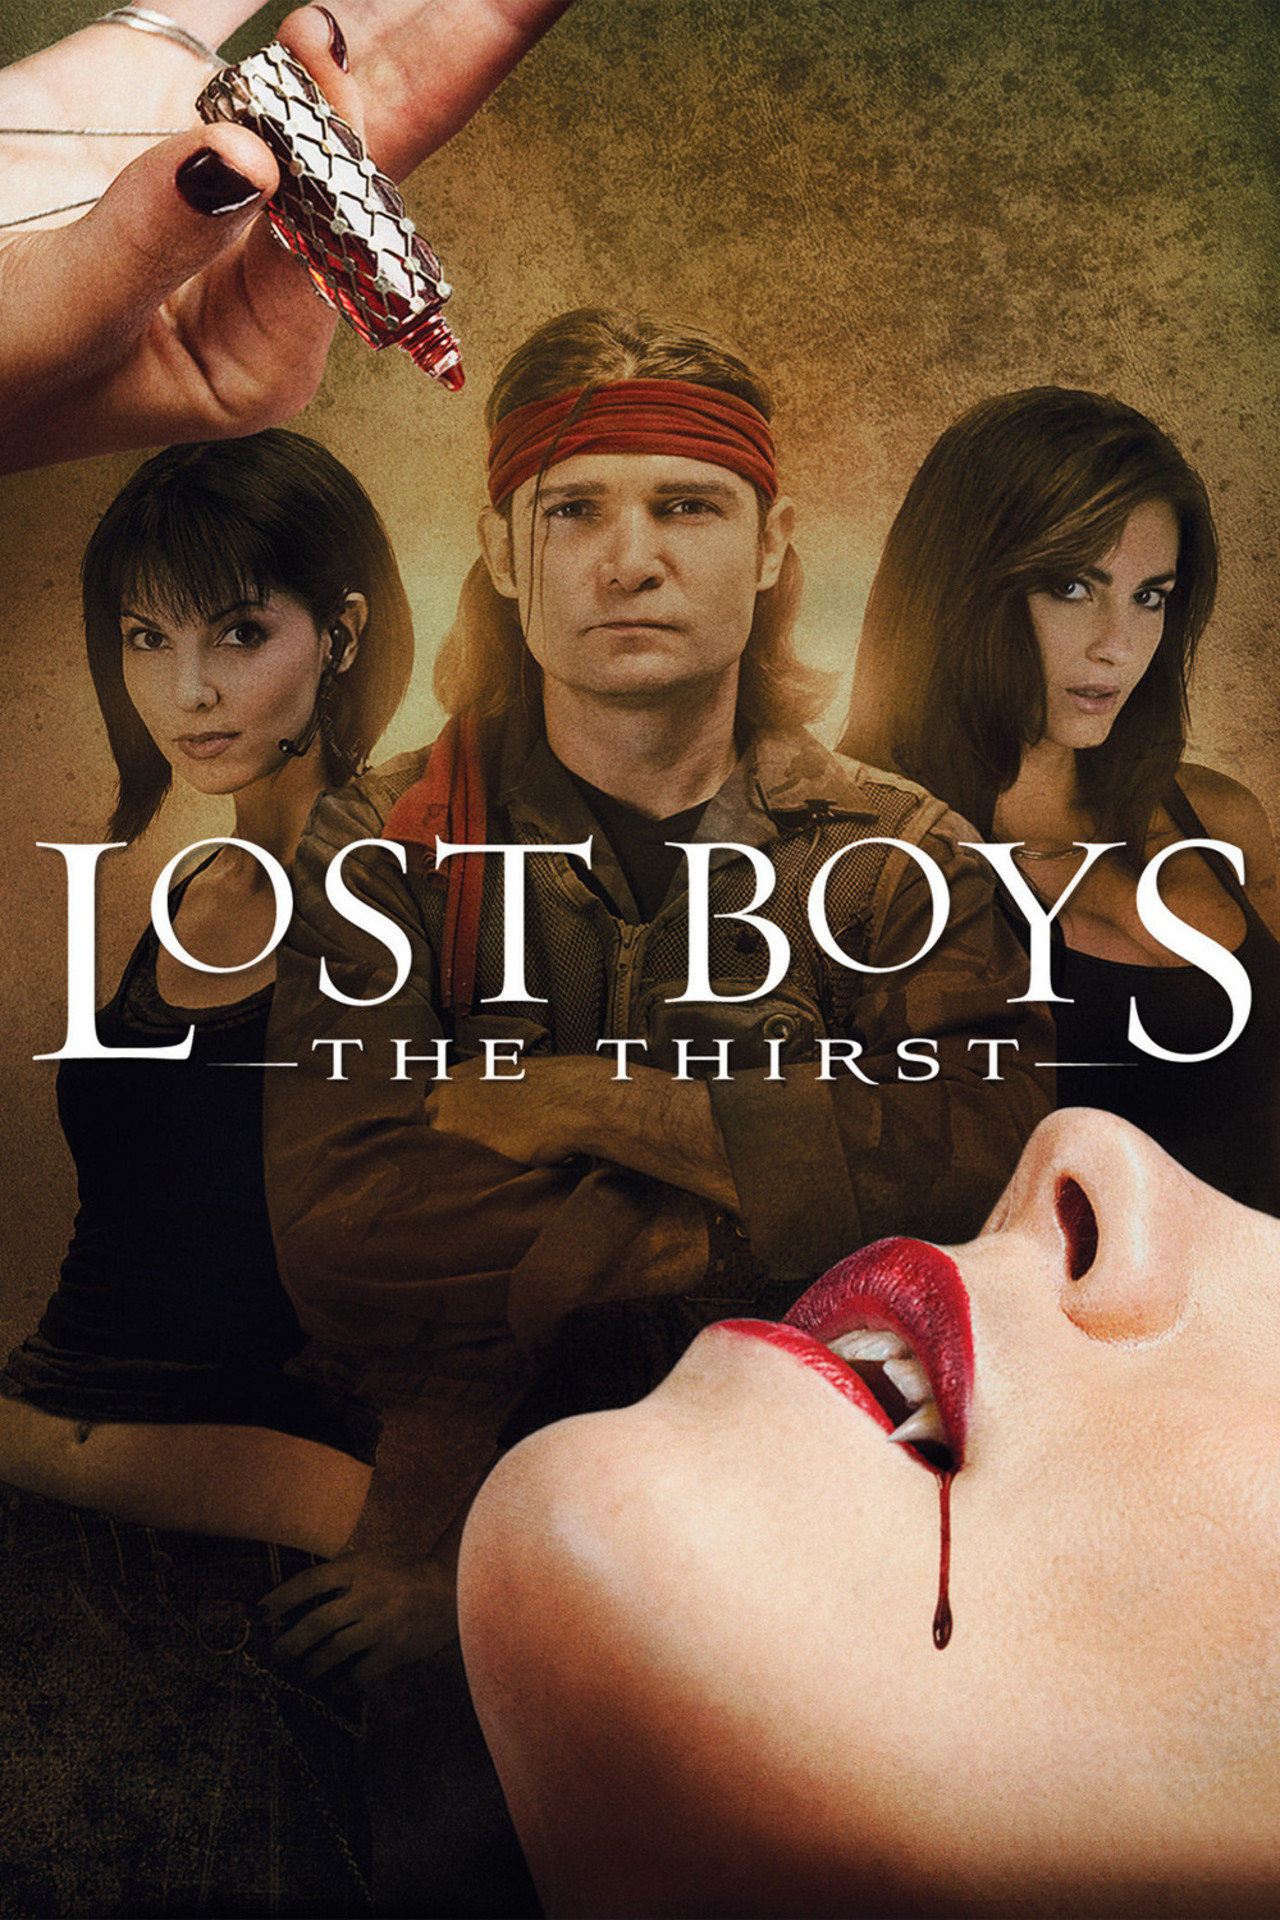 Lost Boys: The Thirst (2010) starring Corey Feldman on DVD on DVD